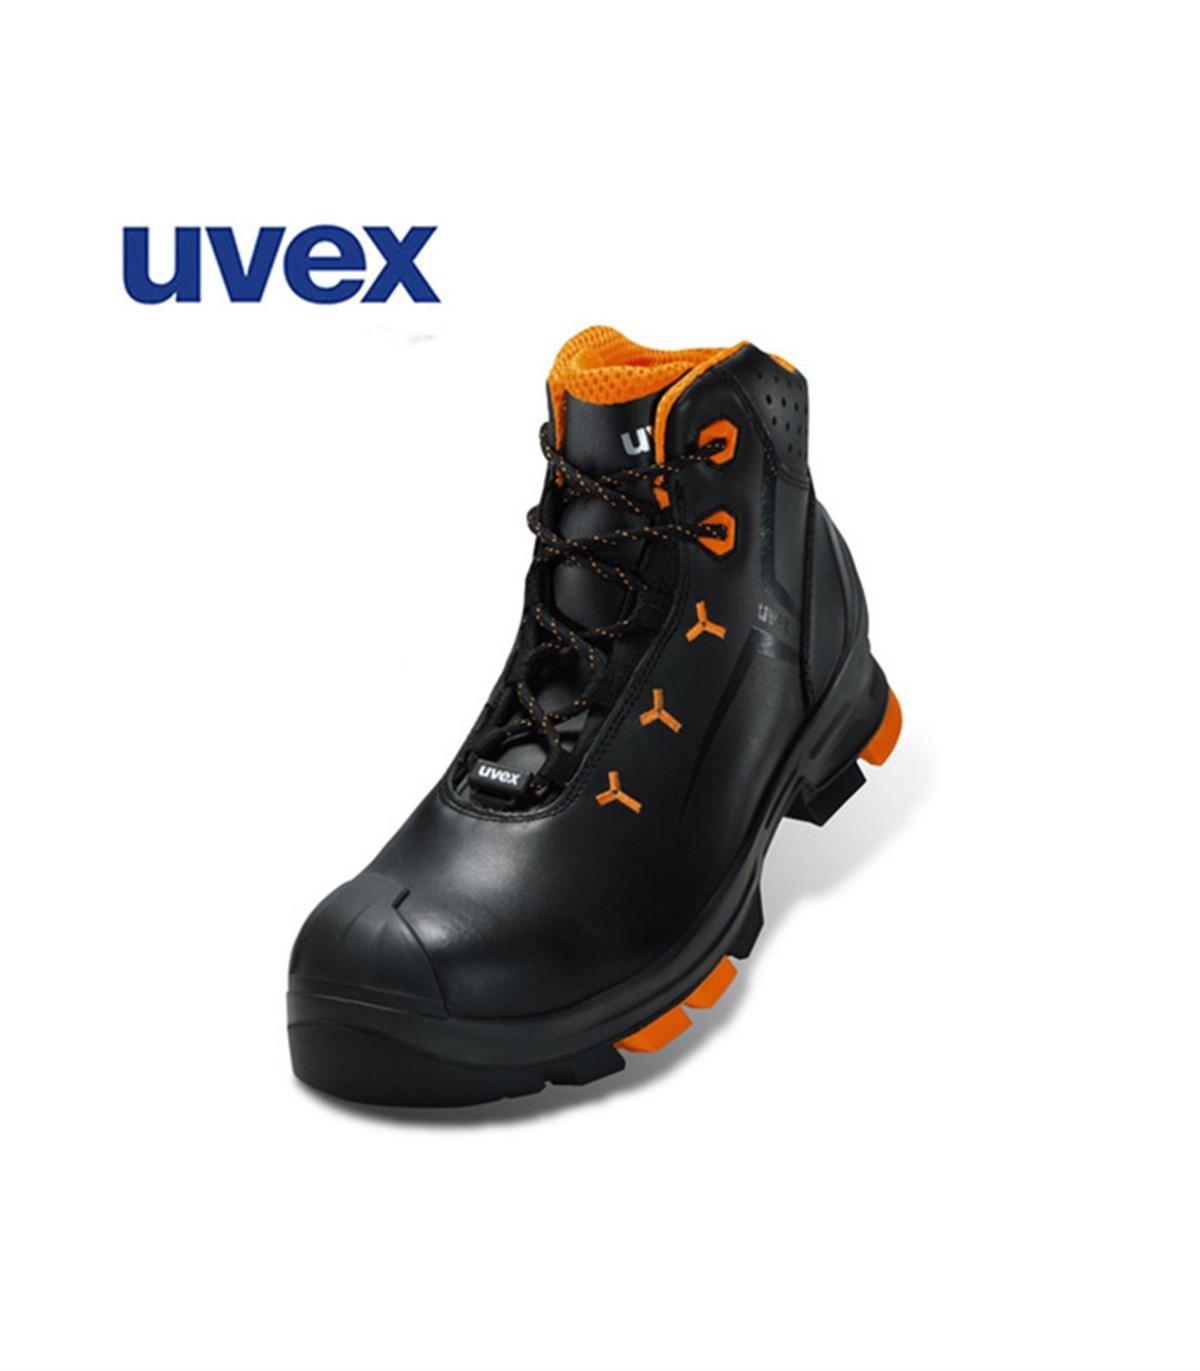 Uvex 6503-2 S3 Botte de travail de sport en cuir